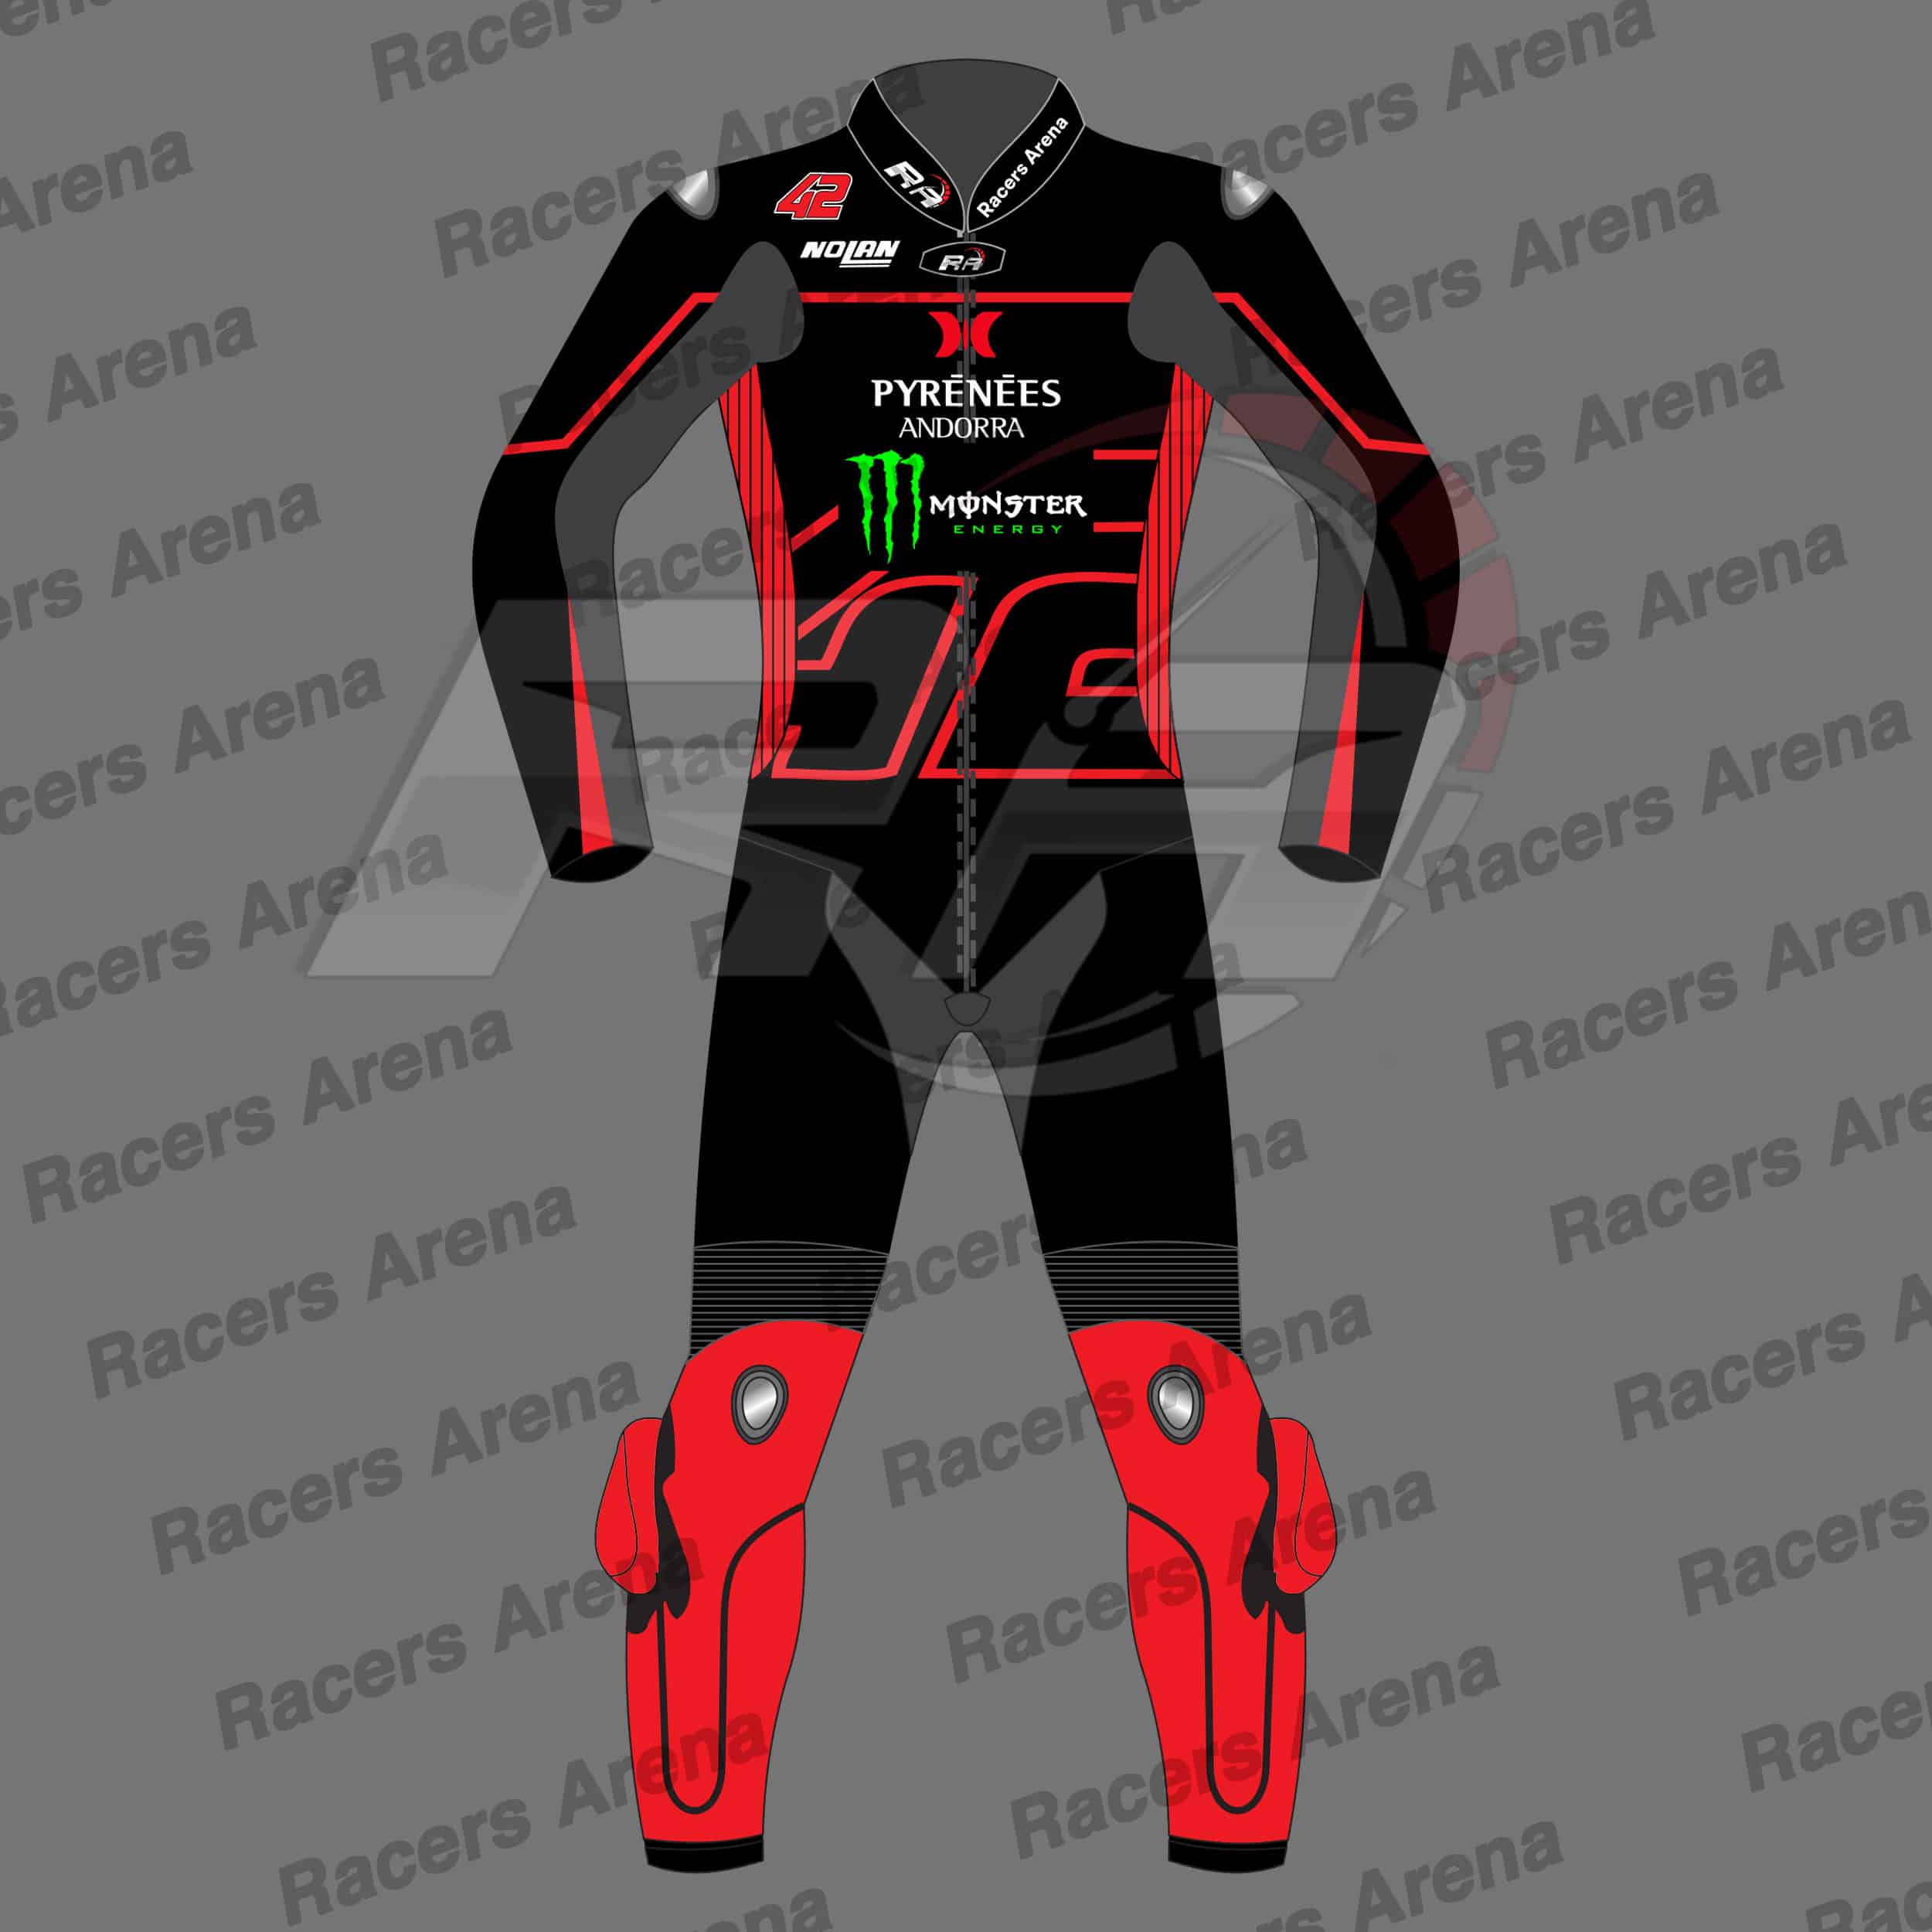 Alex Rins LCR Honda 2023 Winter Test Suit - Racers Arena UK